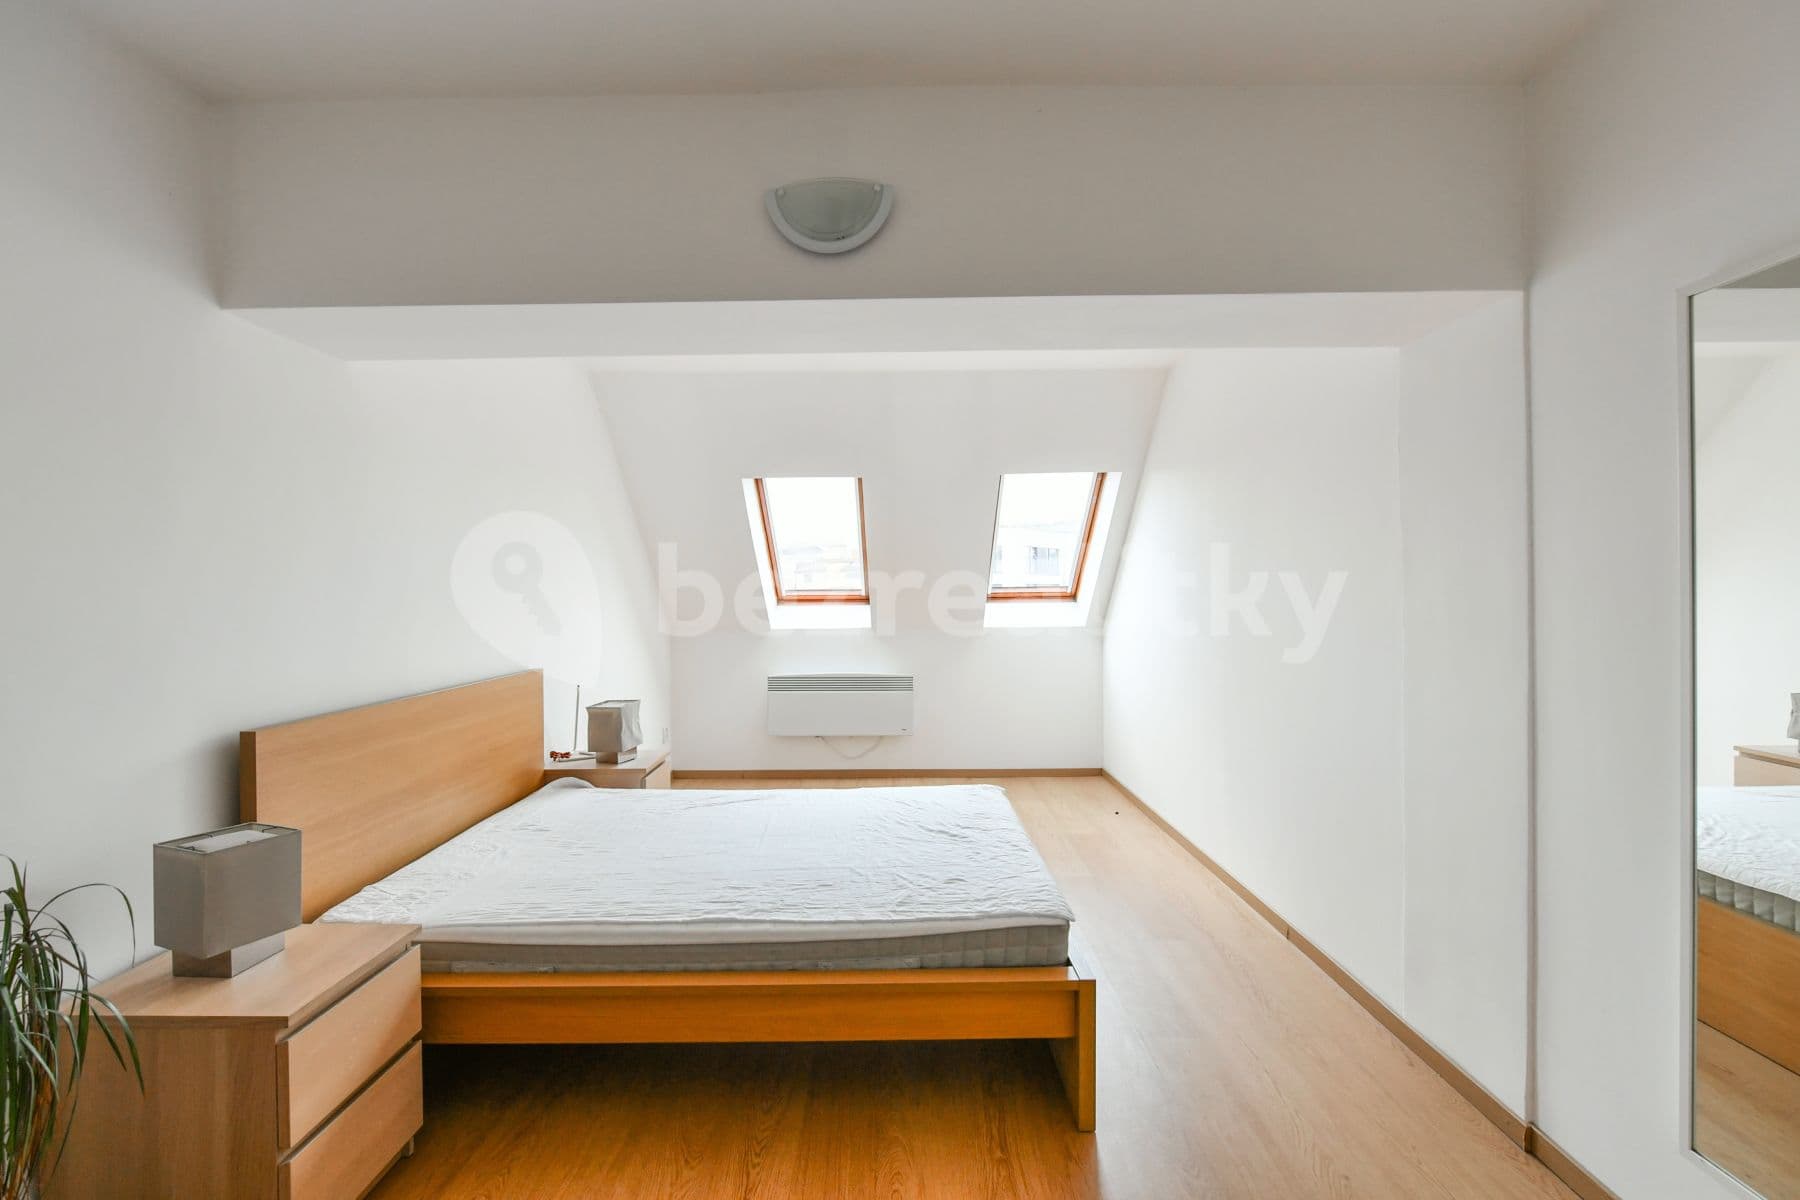 2 bedroom with open-plan kitchen flat for sale, 89 m², Roháčova, Prague, Prague